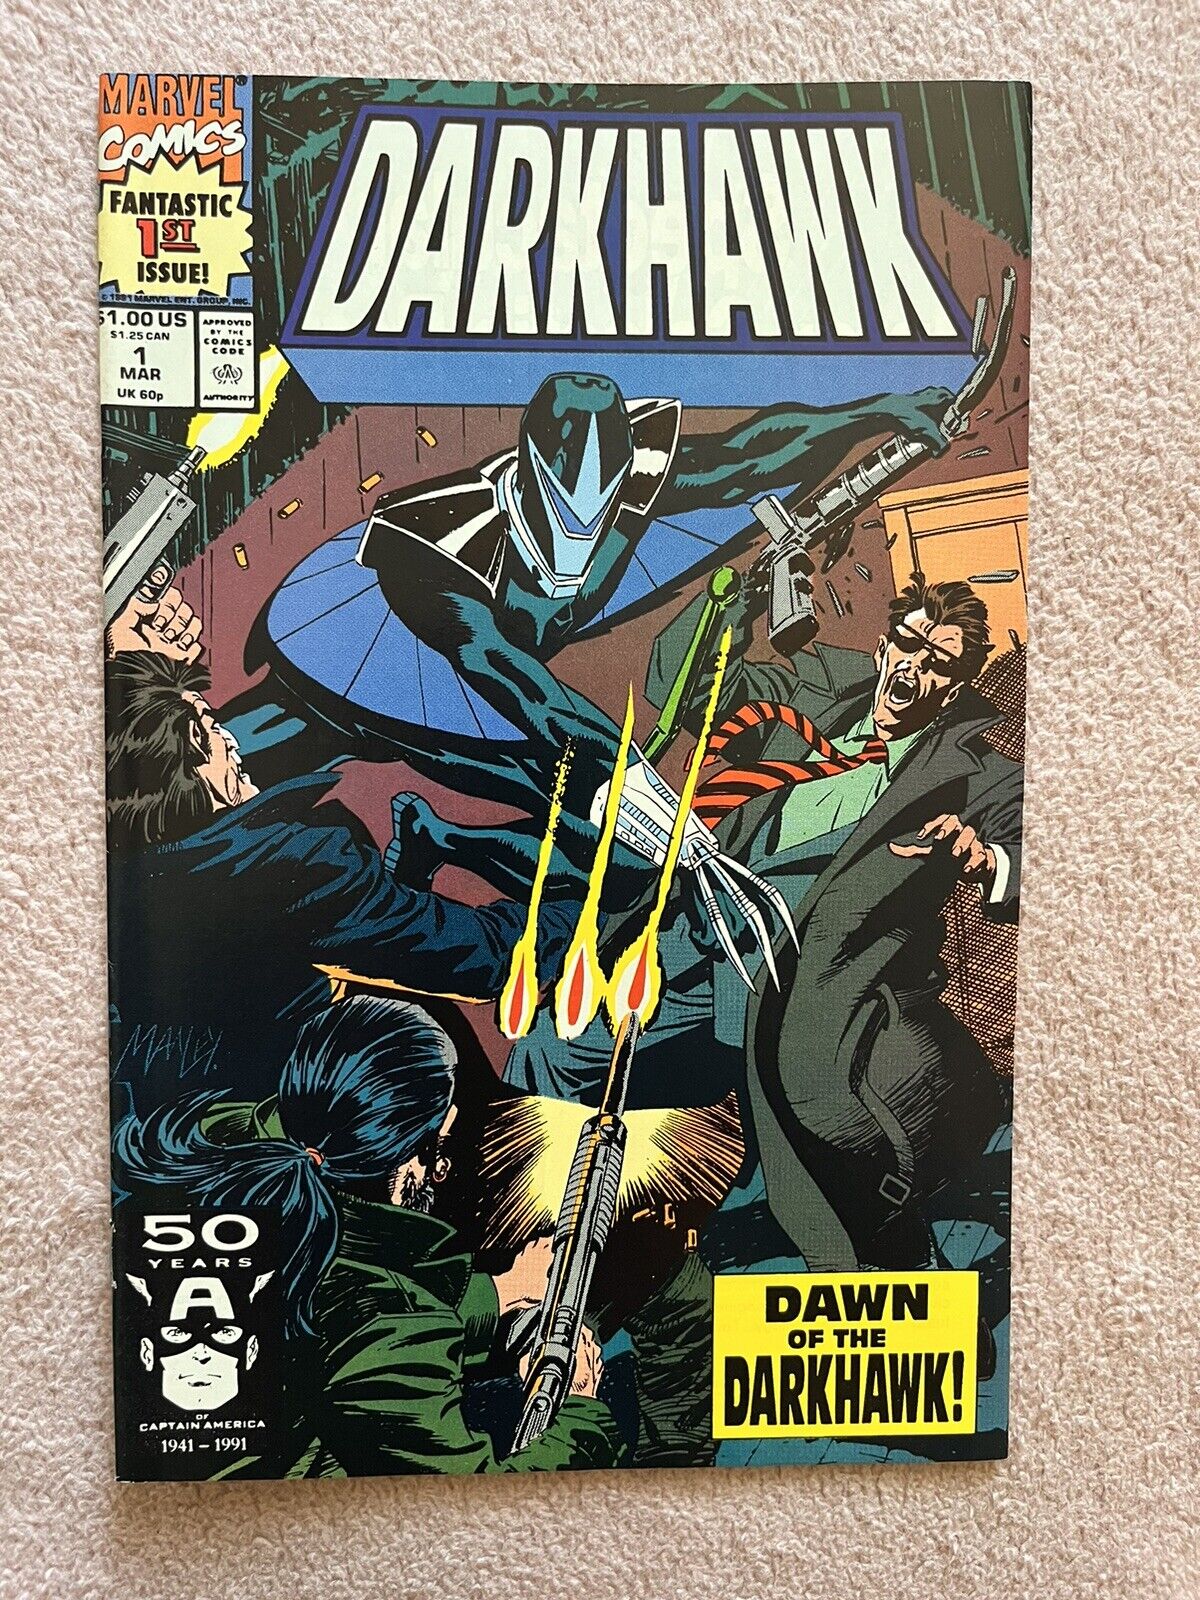 Darkhawk #1 1st Appearance Darkhawk Marvel Comics 1991. HIGH GRADE SHARP COPY